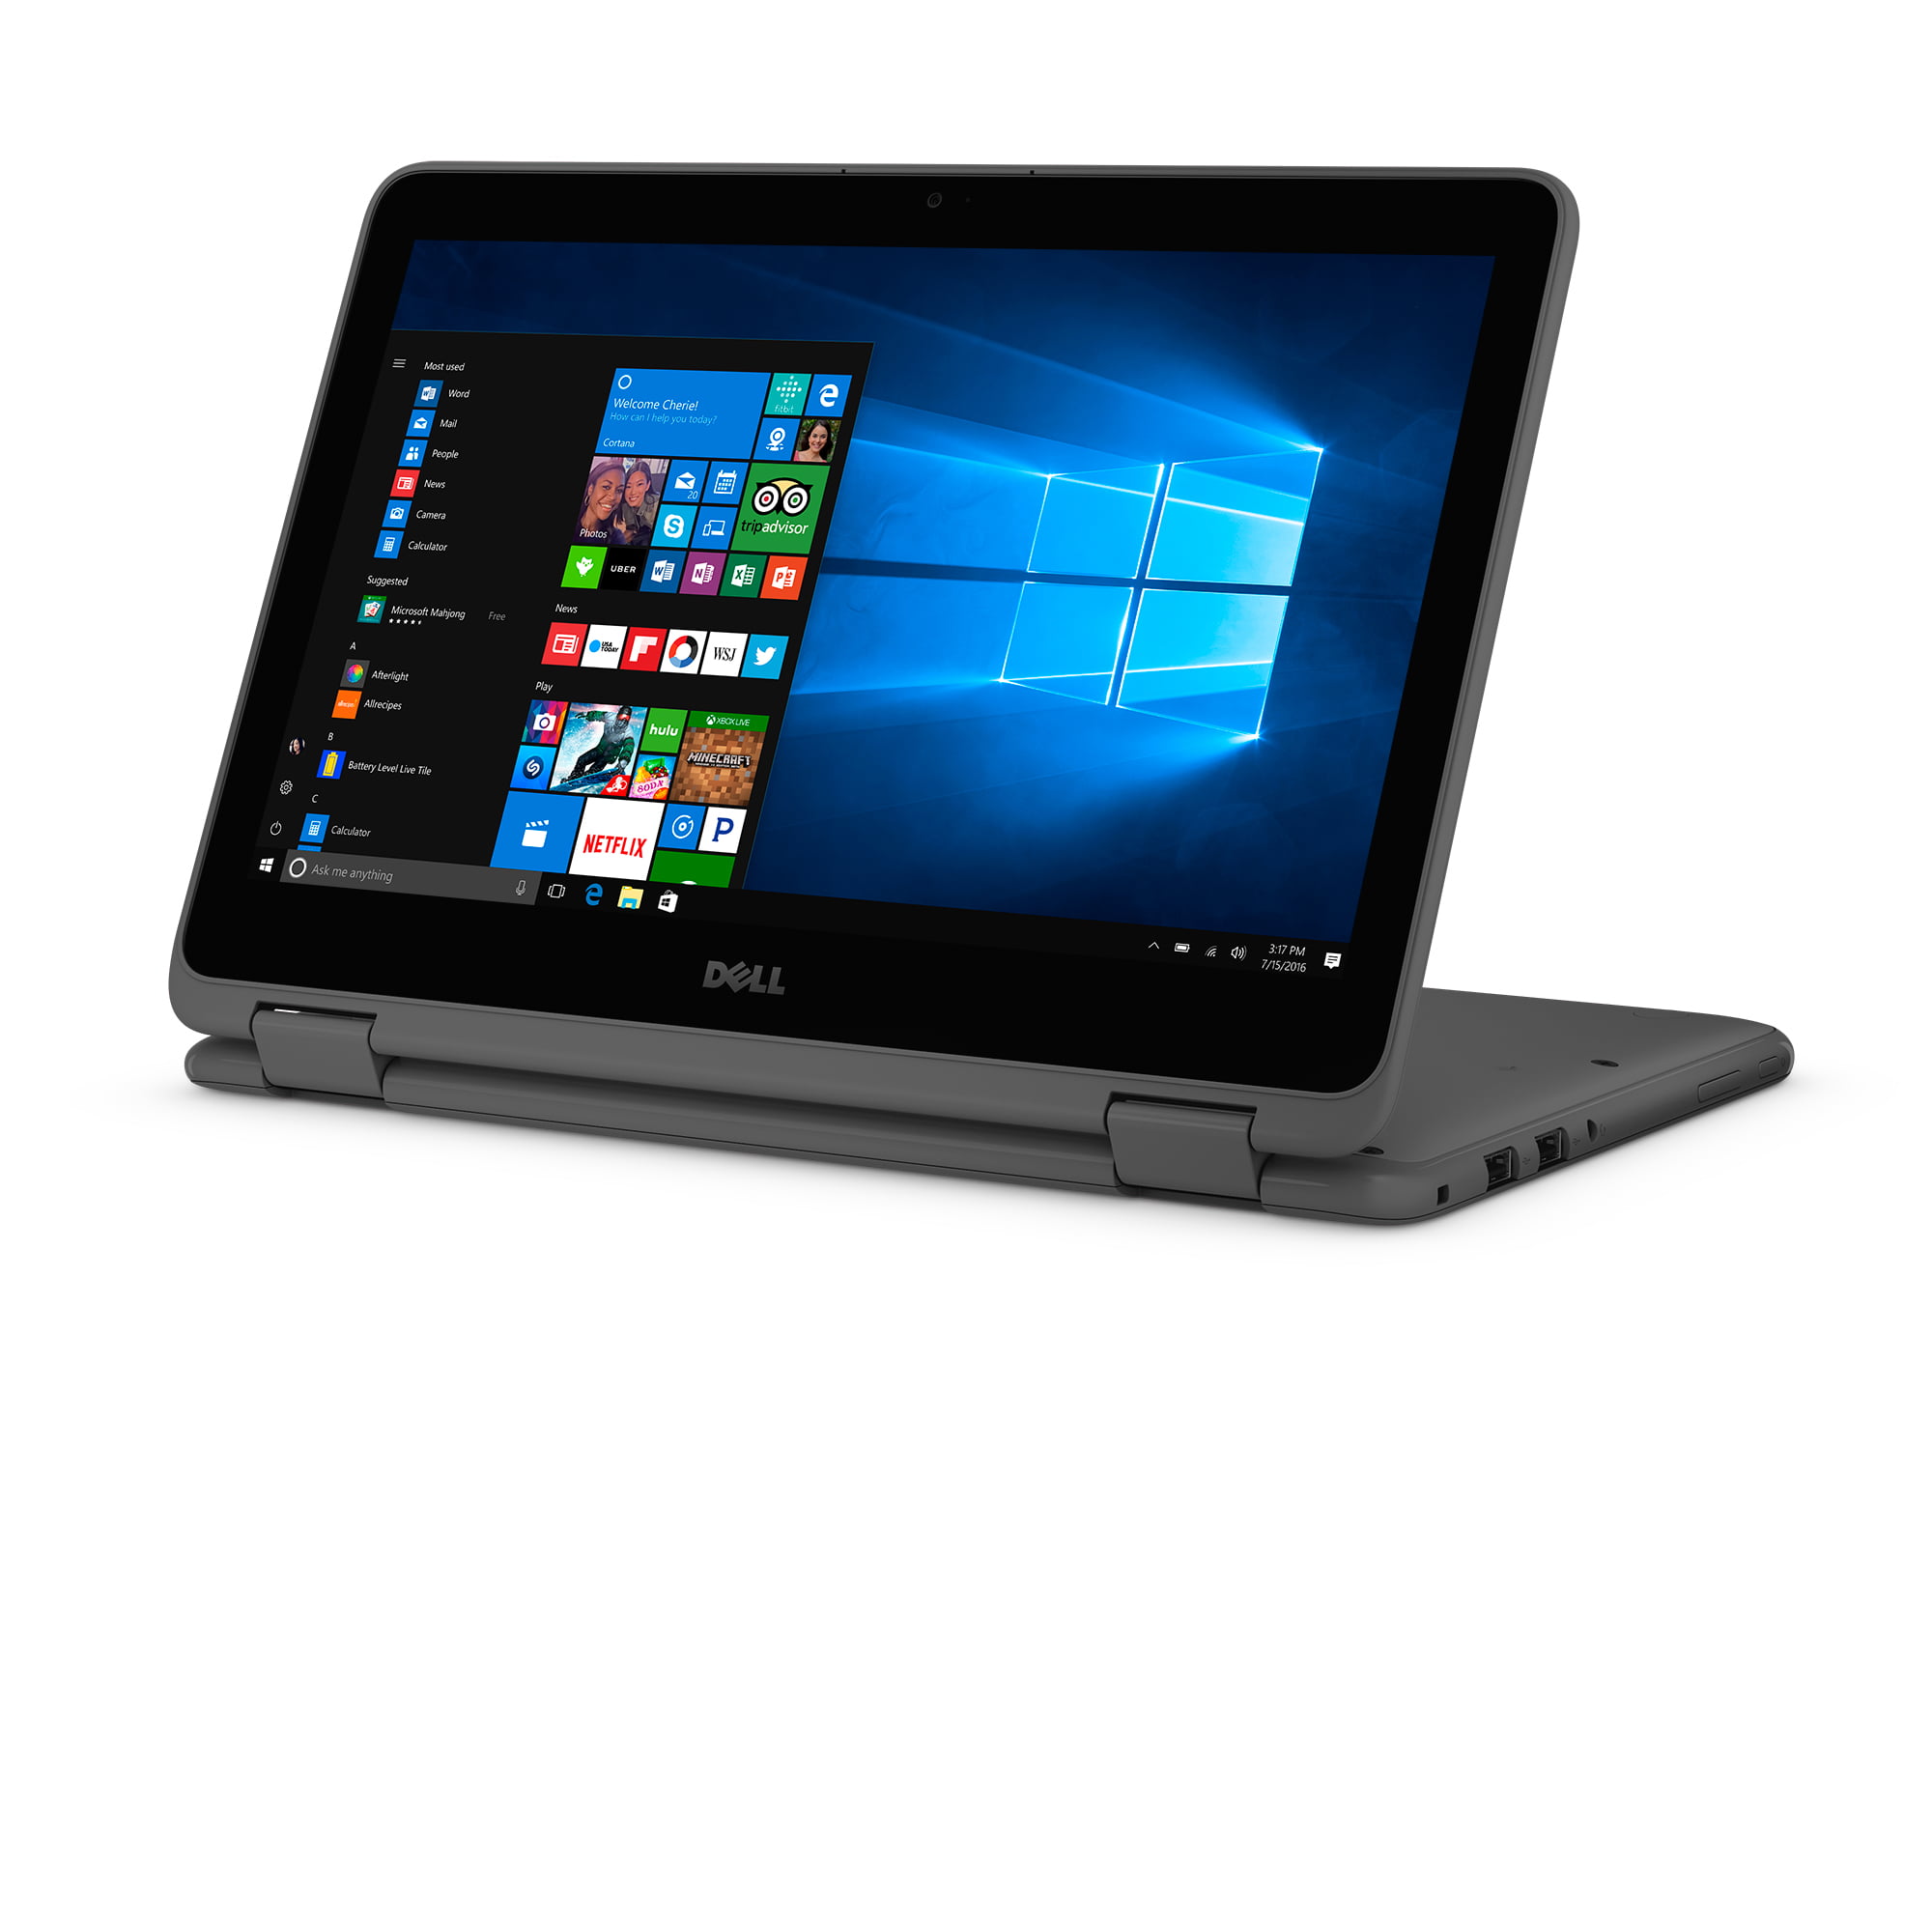 Dell Inspiron 11 i3168 11.6" Laptop, Touchscreen, 2in1, Windows 10 Home, Intel eBay